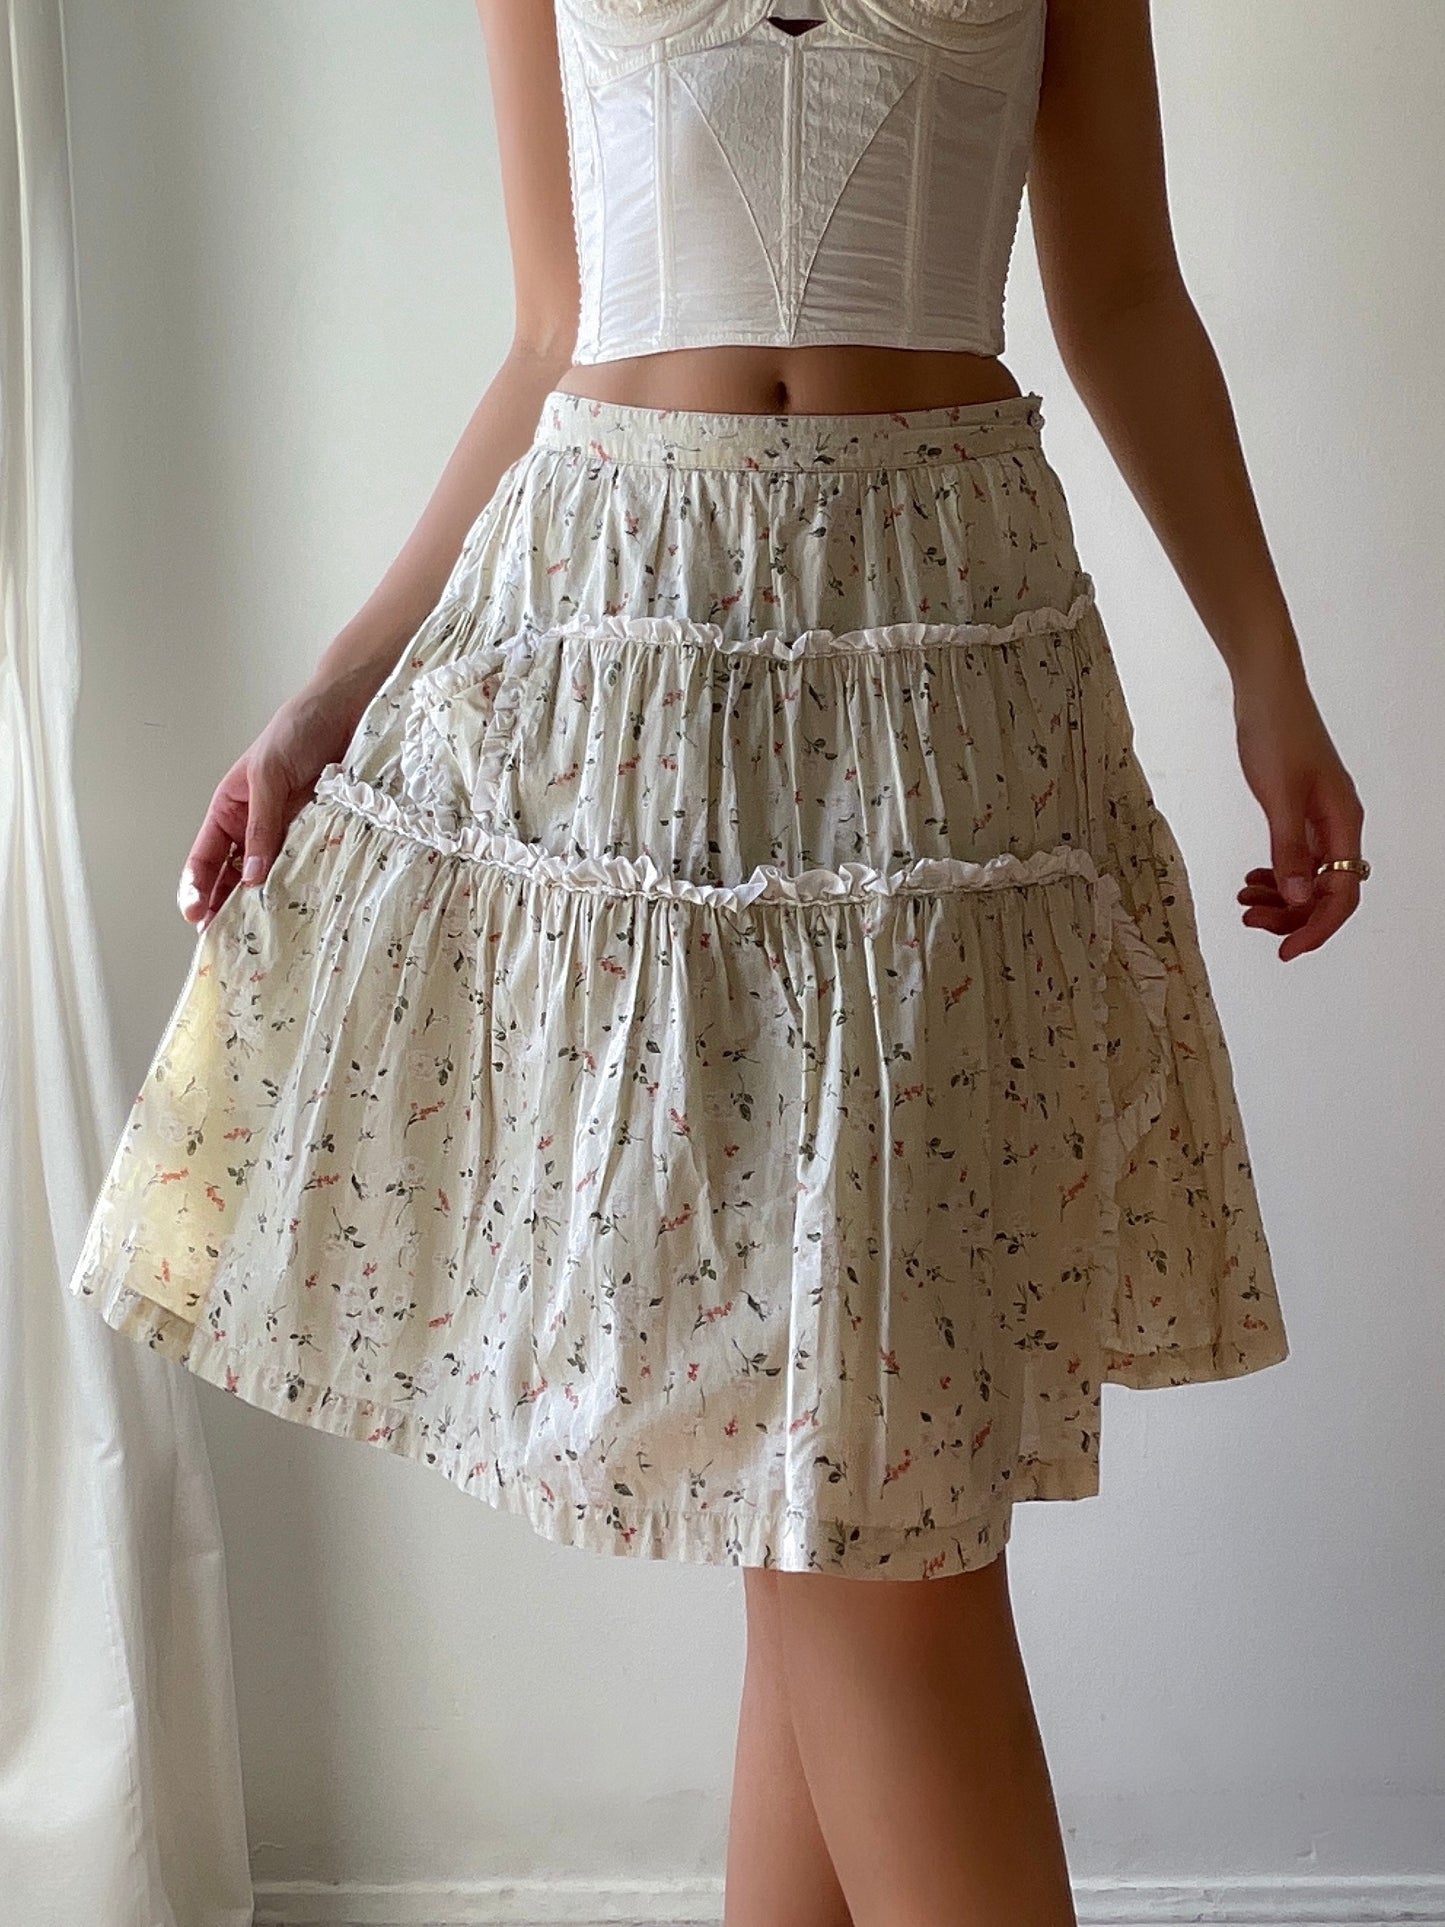 Floral Midi Skirt (XS/S)